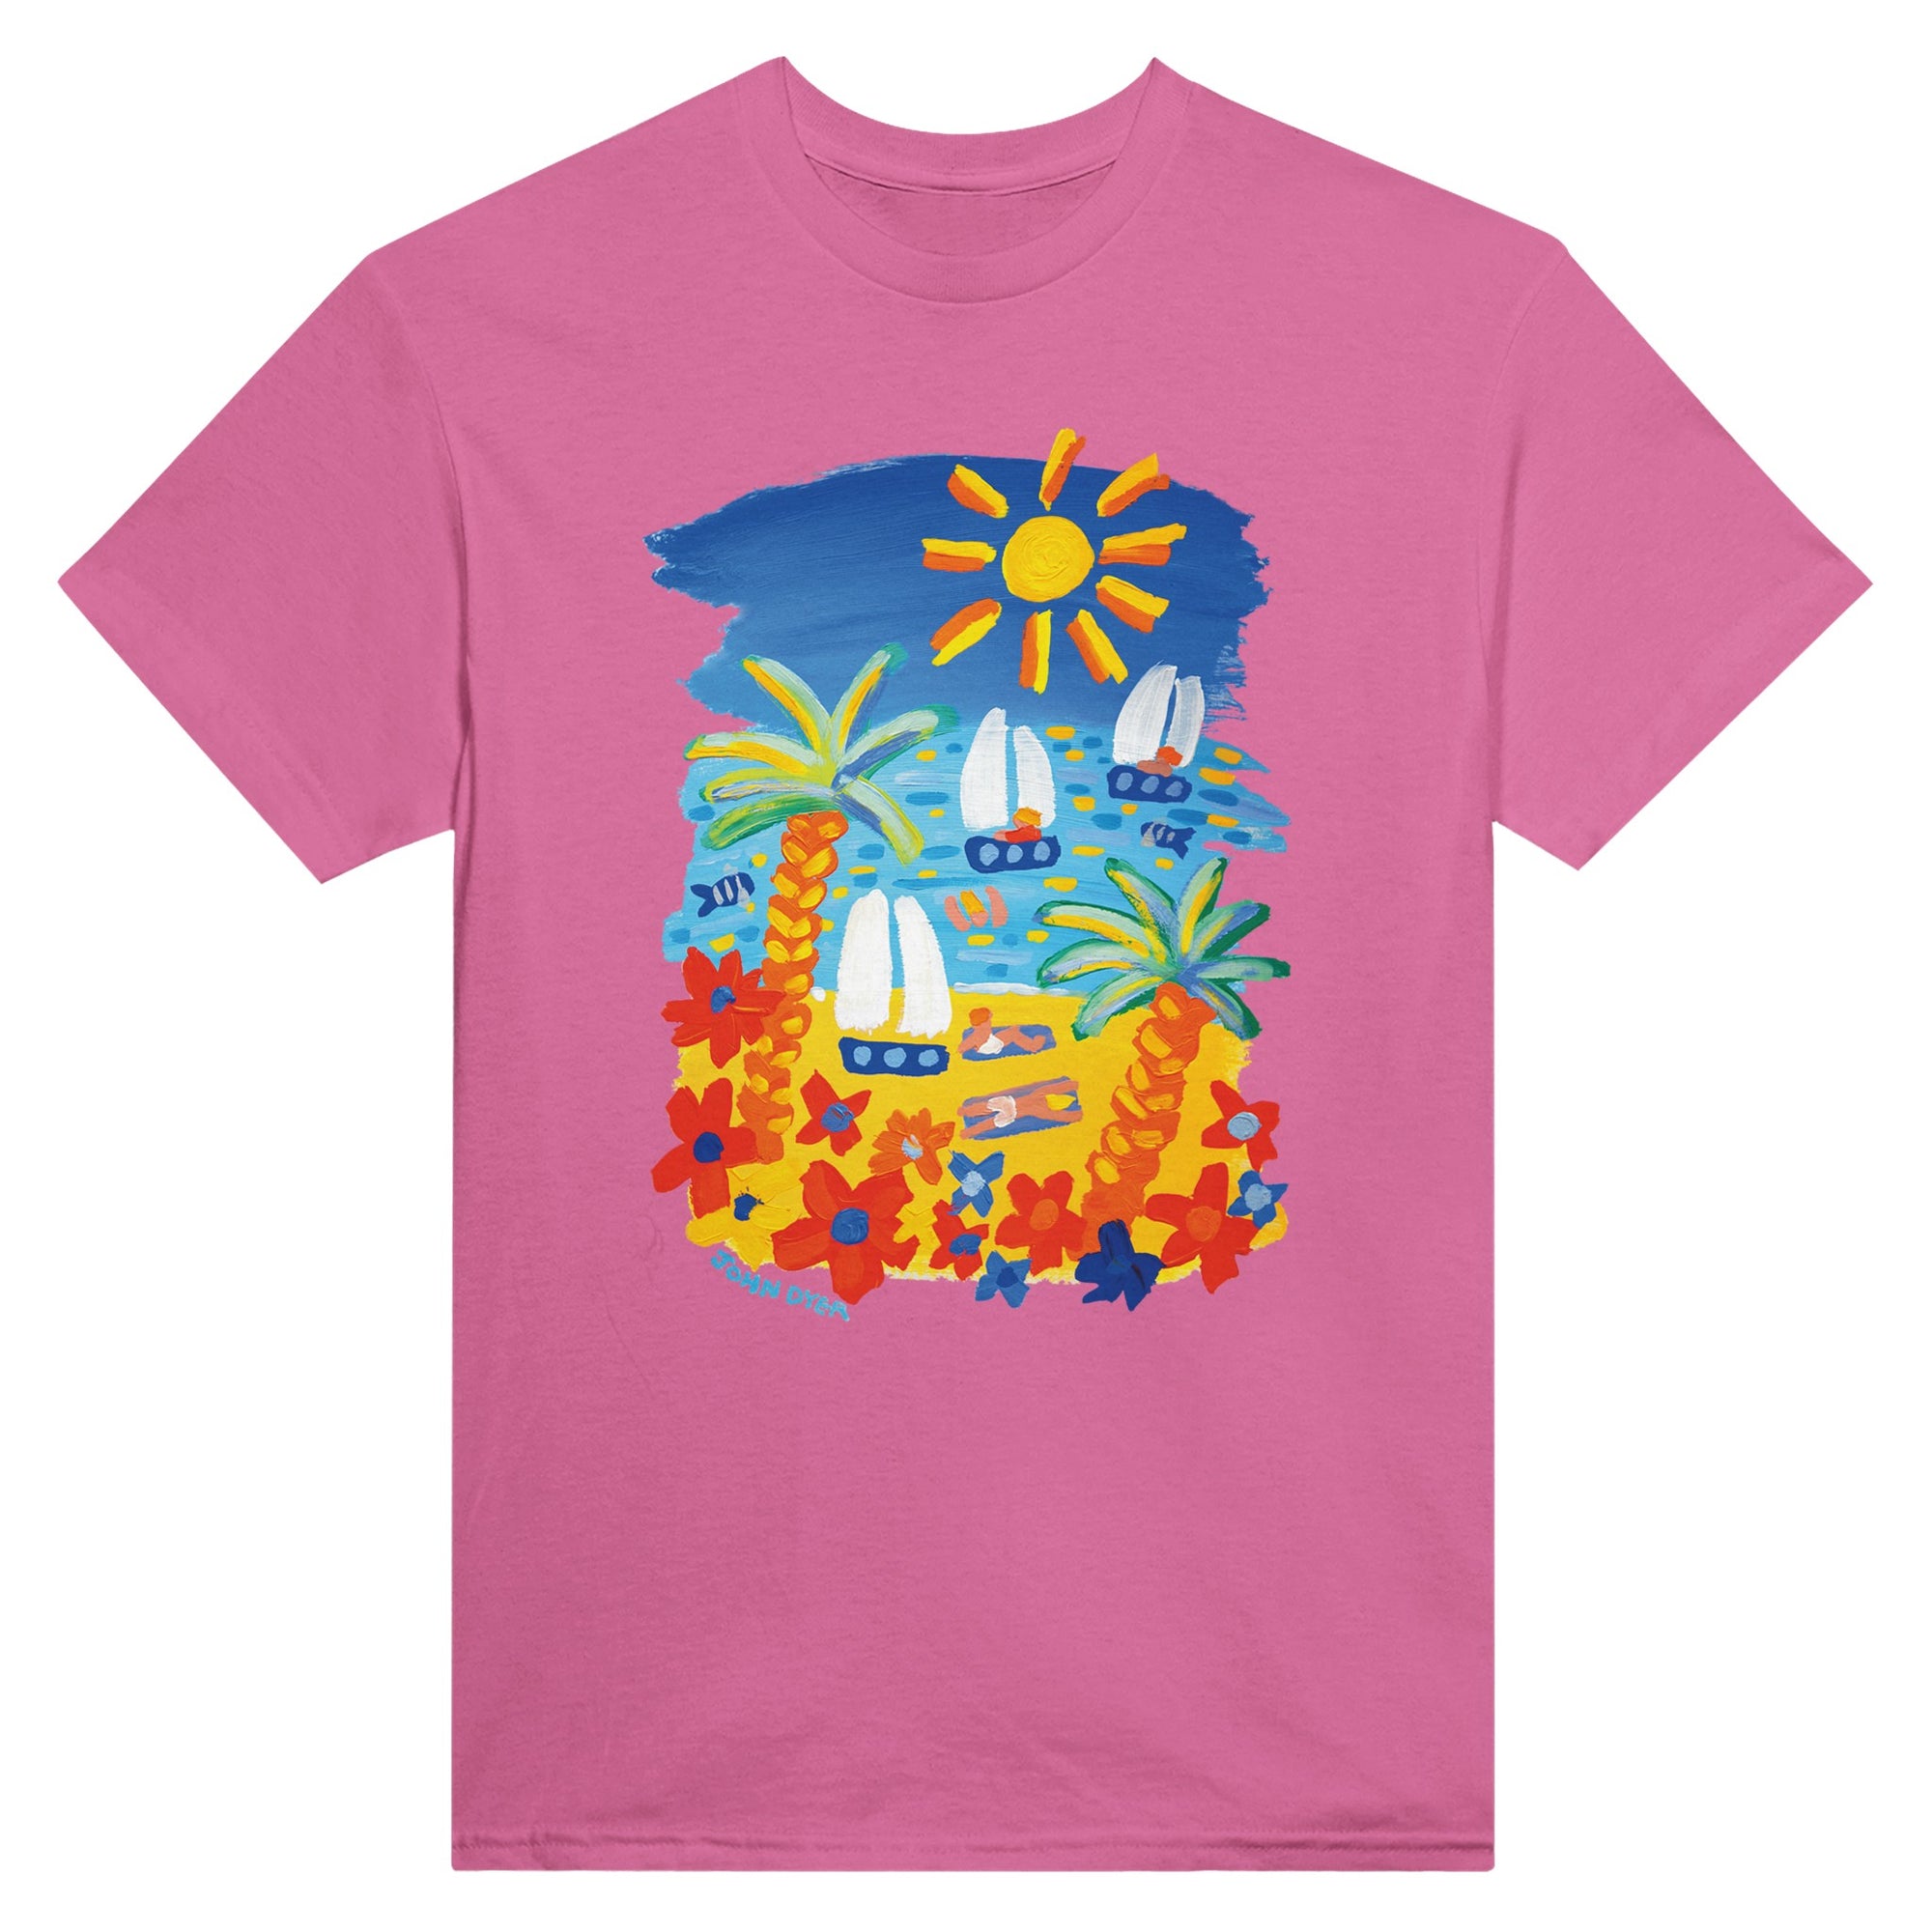 Pink John Dyer Unisex Seaside 'Beach Vibes' Art Cornwall T-Shirt. Cornwall Art Gallery